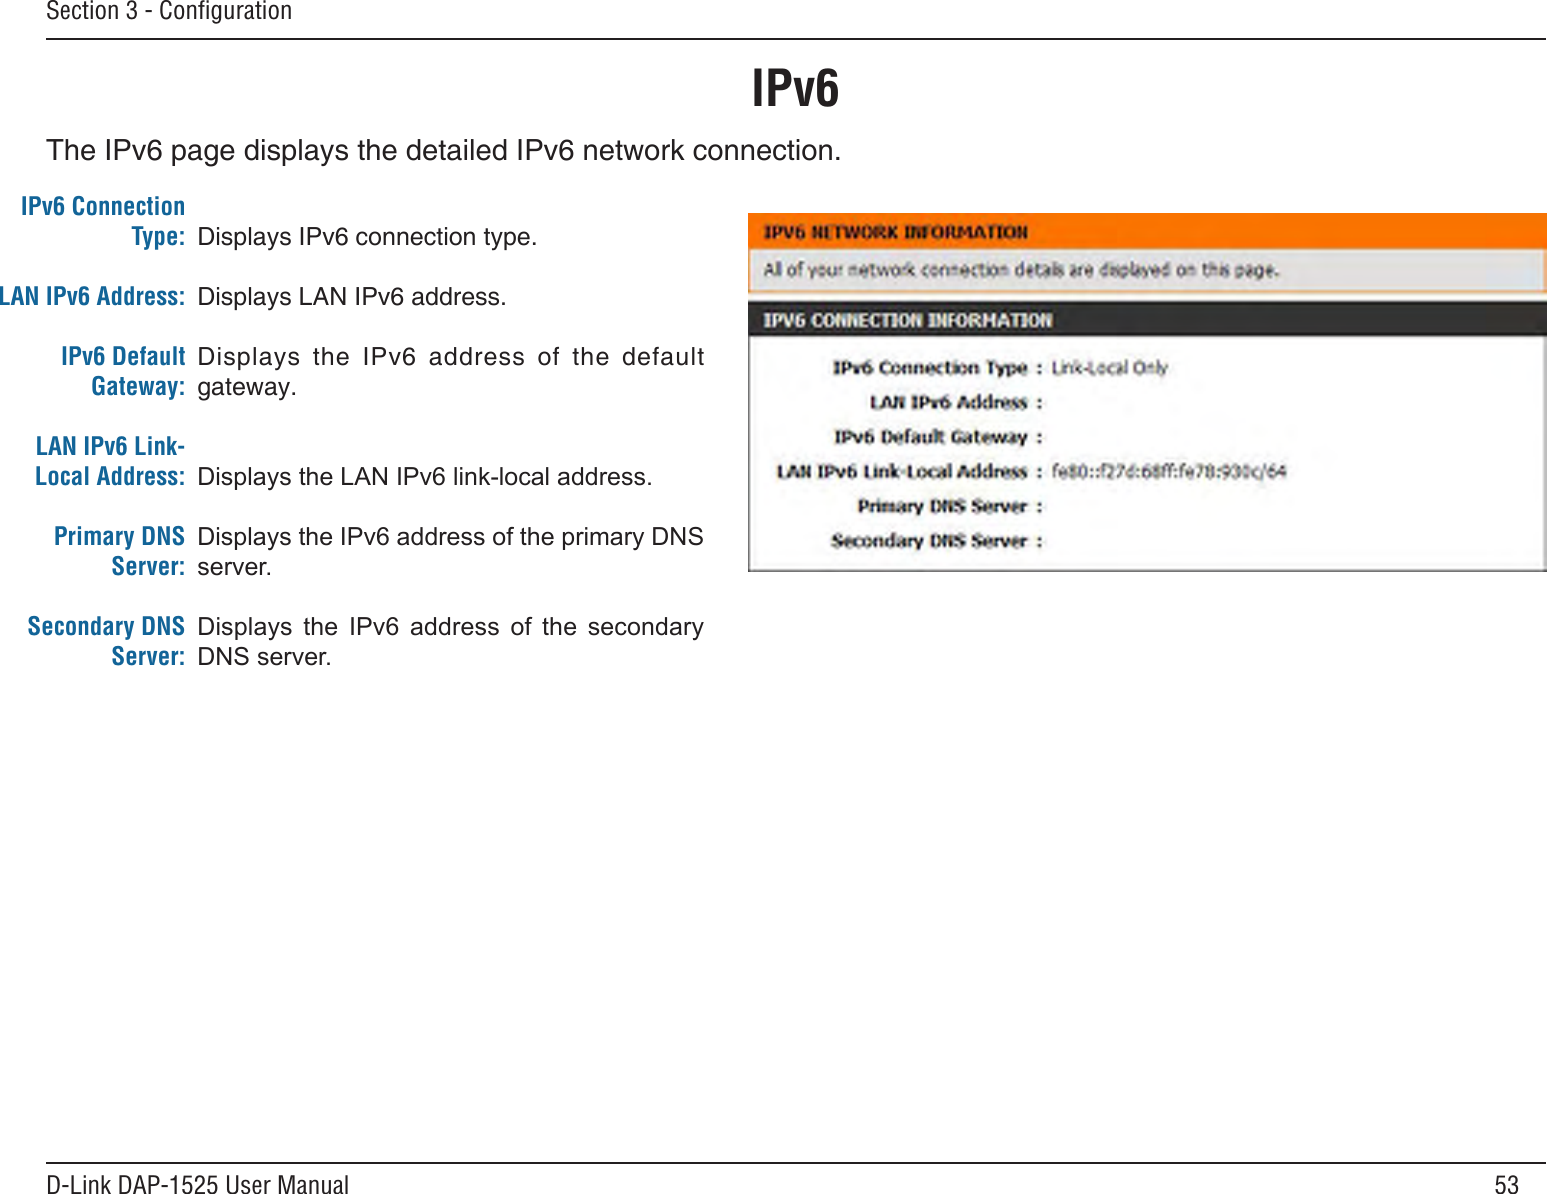 53D-Link DAP-1525 User ManualSection 3 - ConﬁgurationIPv6The IPv6 page displays the detailed IPv6 network connection.IPv6 Connection Type:LAN IPv6 Address:IPv6 Default Gateway:LAN IPv6 Link-Local Address:Primary DNS Server:Secondary DNS Server:Displays IPv6 connection type.Displays LAN IPv6 address.Displays  the  IPv6  address  of  the  default gateway.DisplaystheLANIPv6link-localaddress.DisplaystheIPv6addressoftheprimaryDNSserver.Displays the IPv6 address of the secondaryDNSserver.